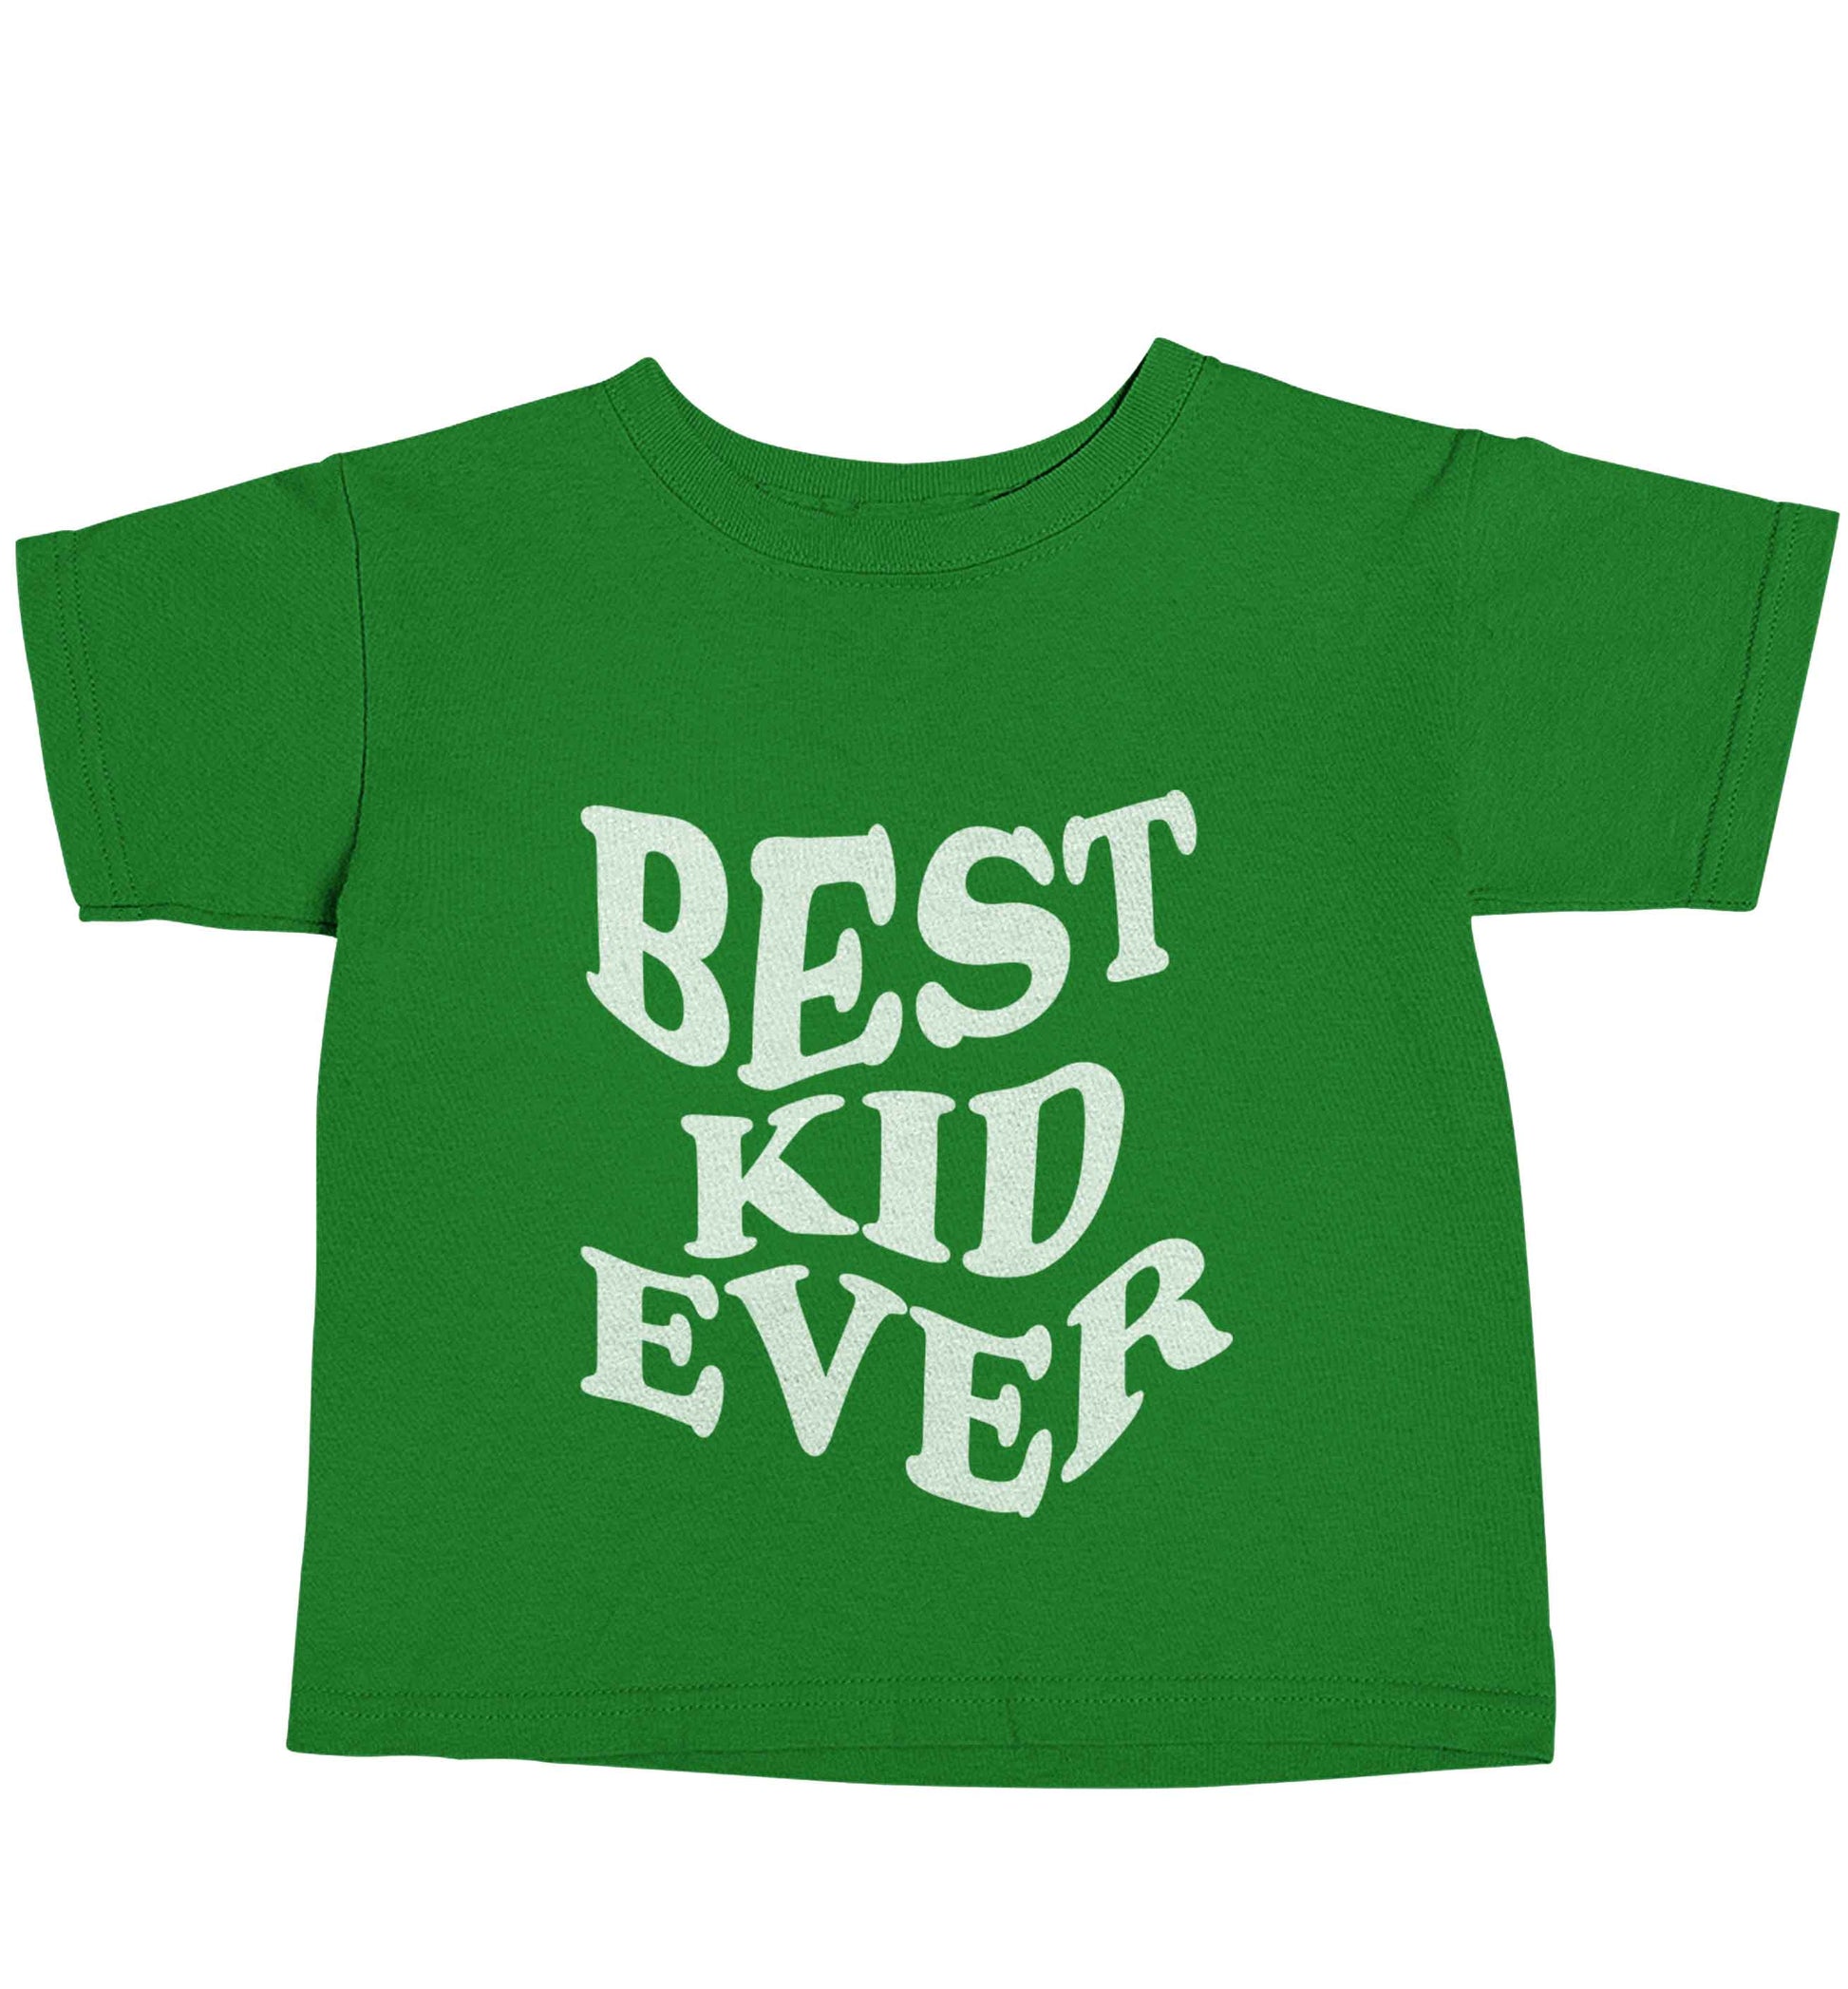 Best kid ever green baby toddler Tshirt 2 Years